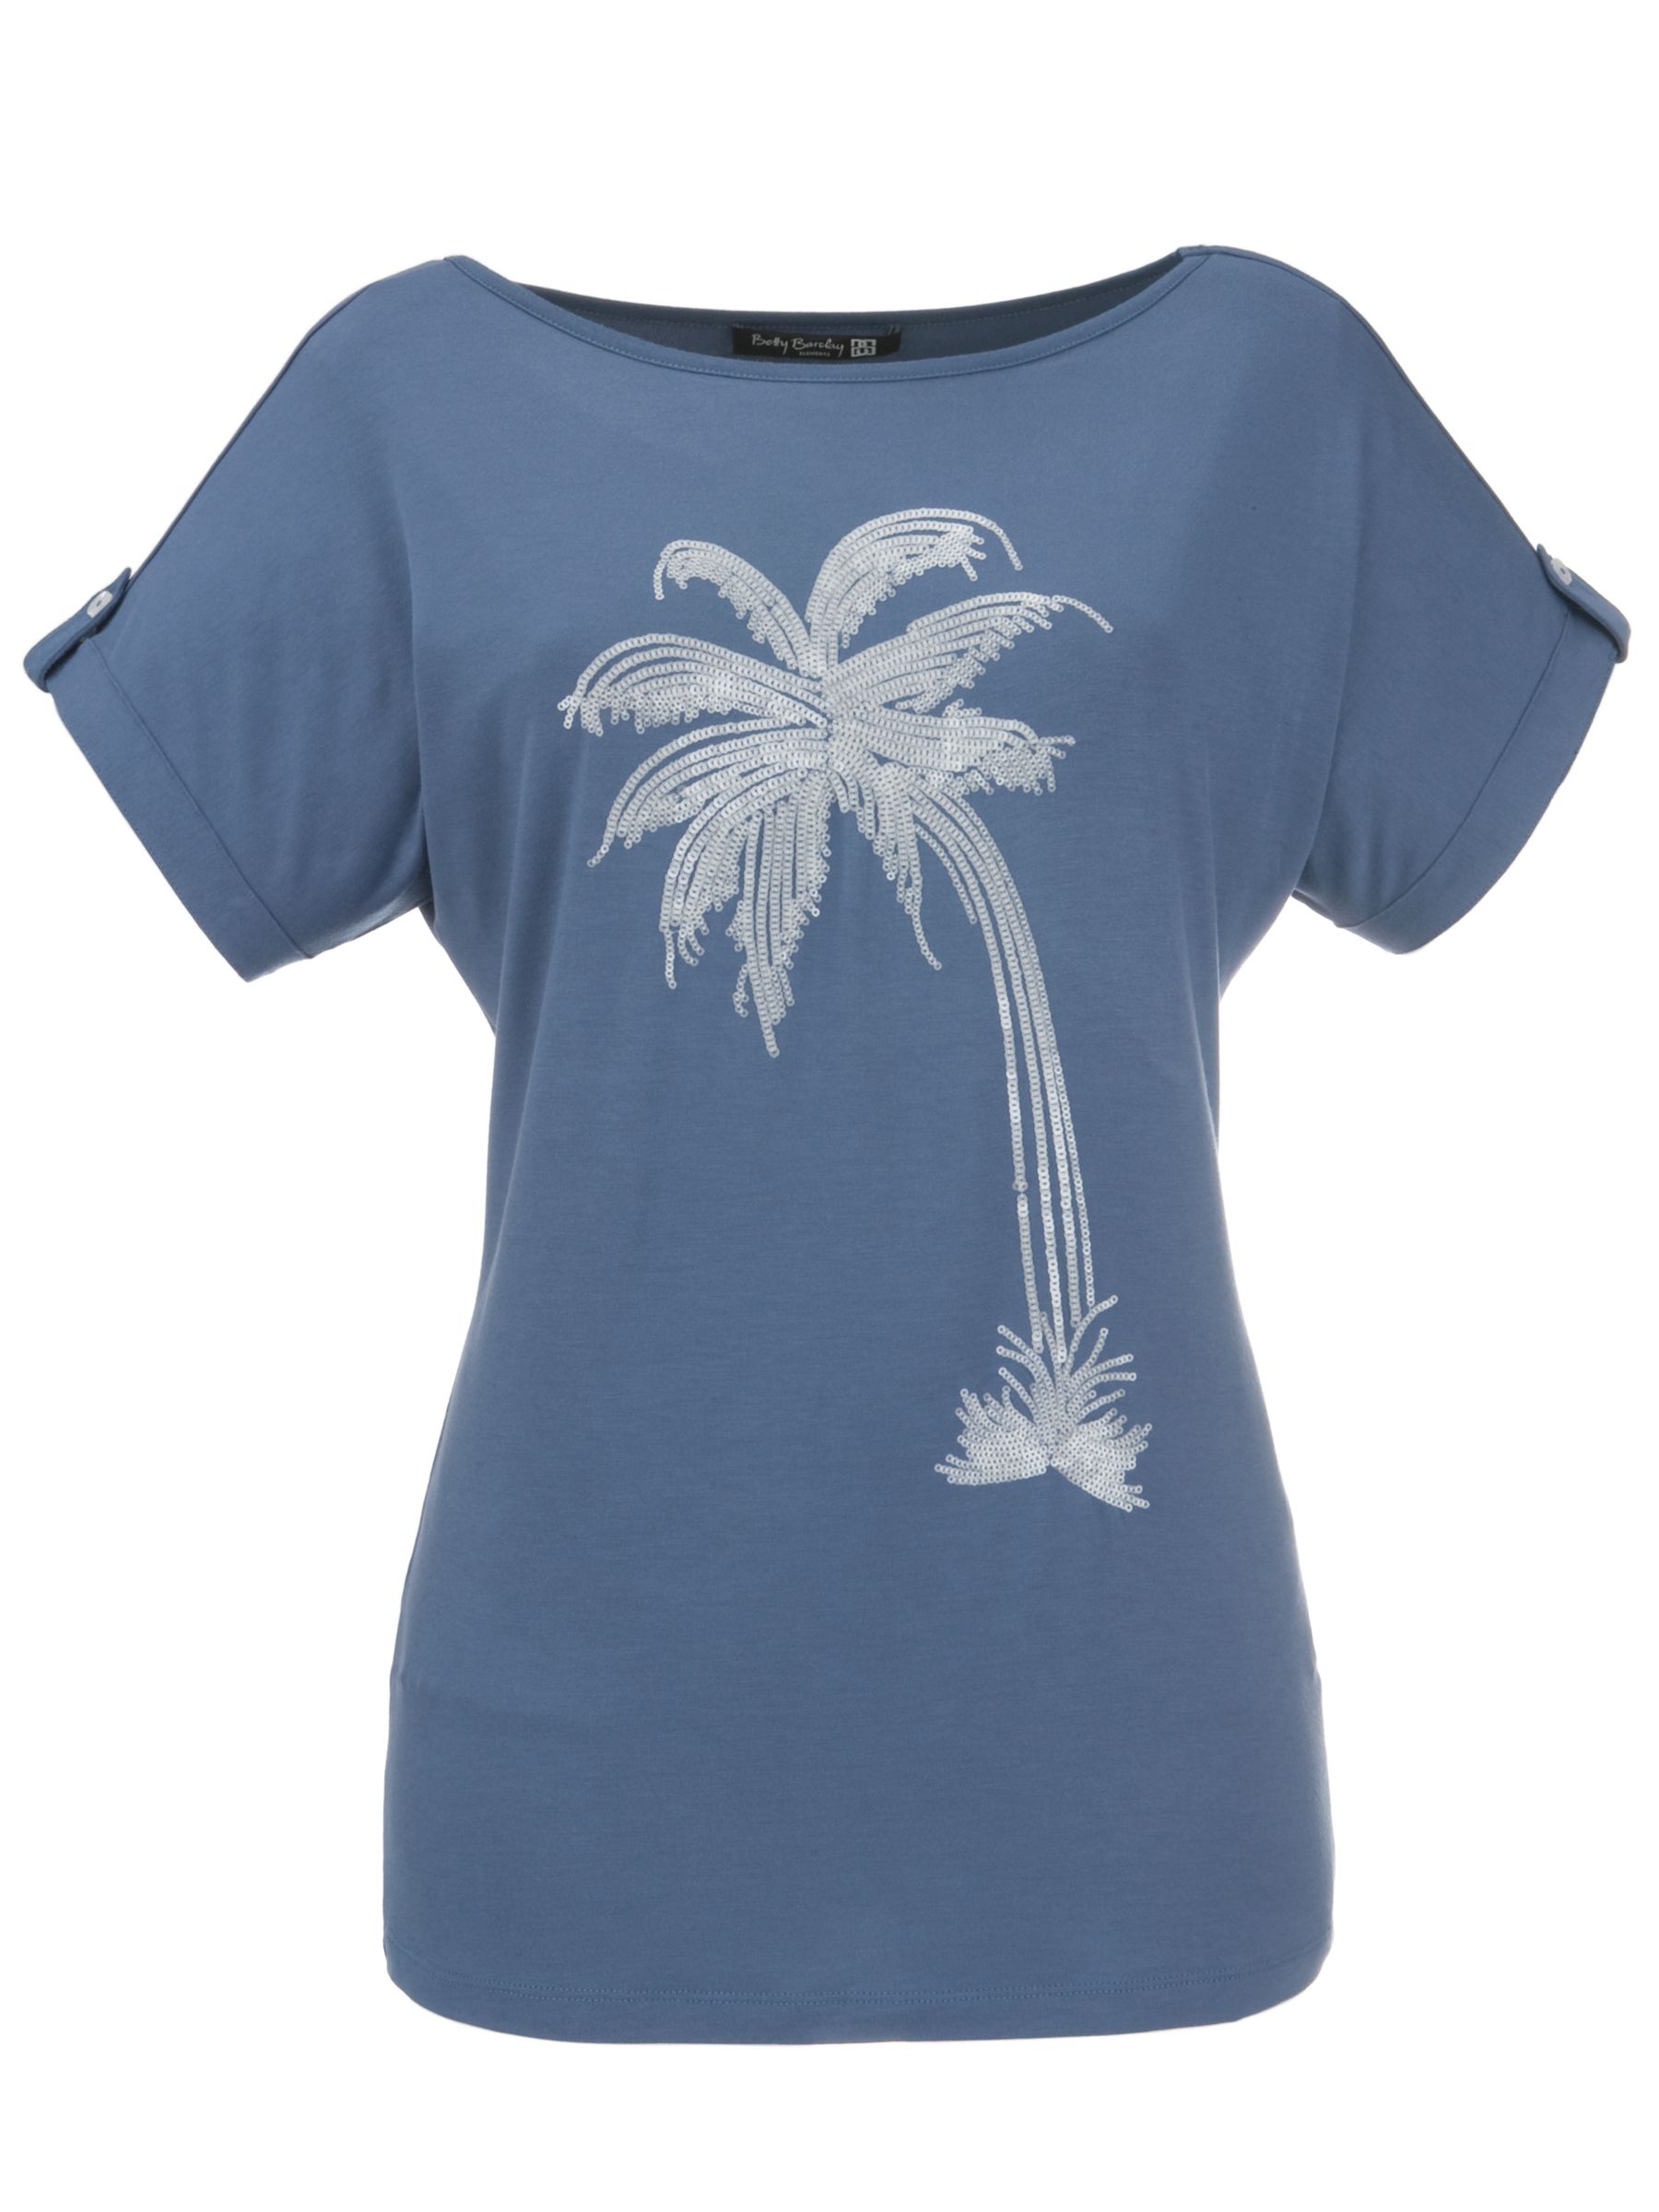 Stud Tab Sequin Palm Tree T-Shirt,